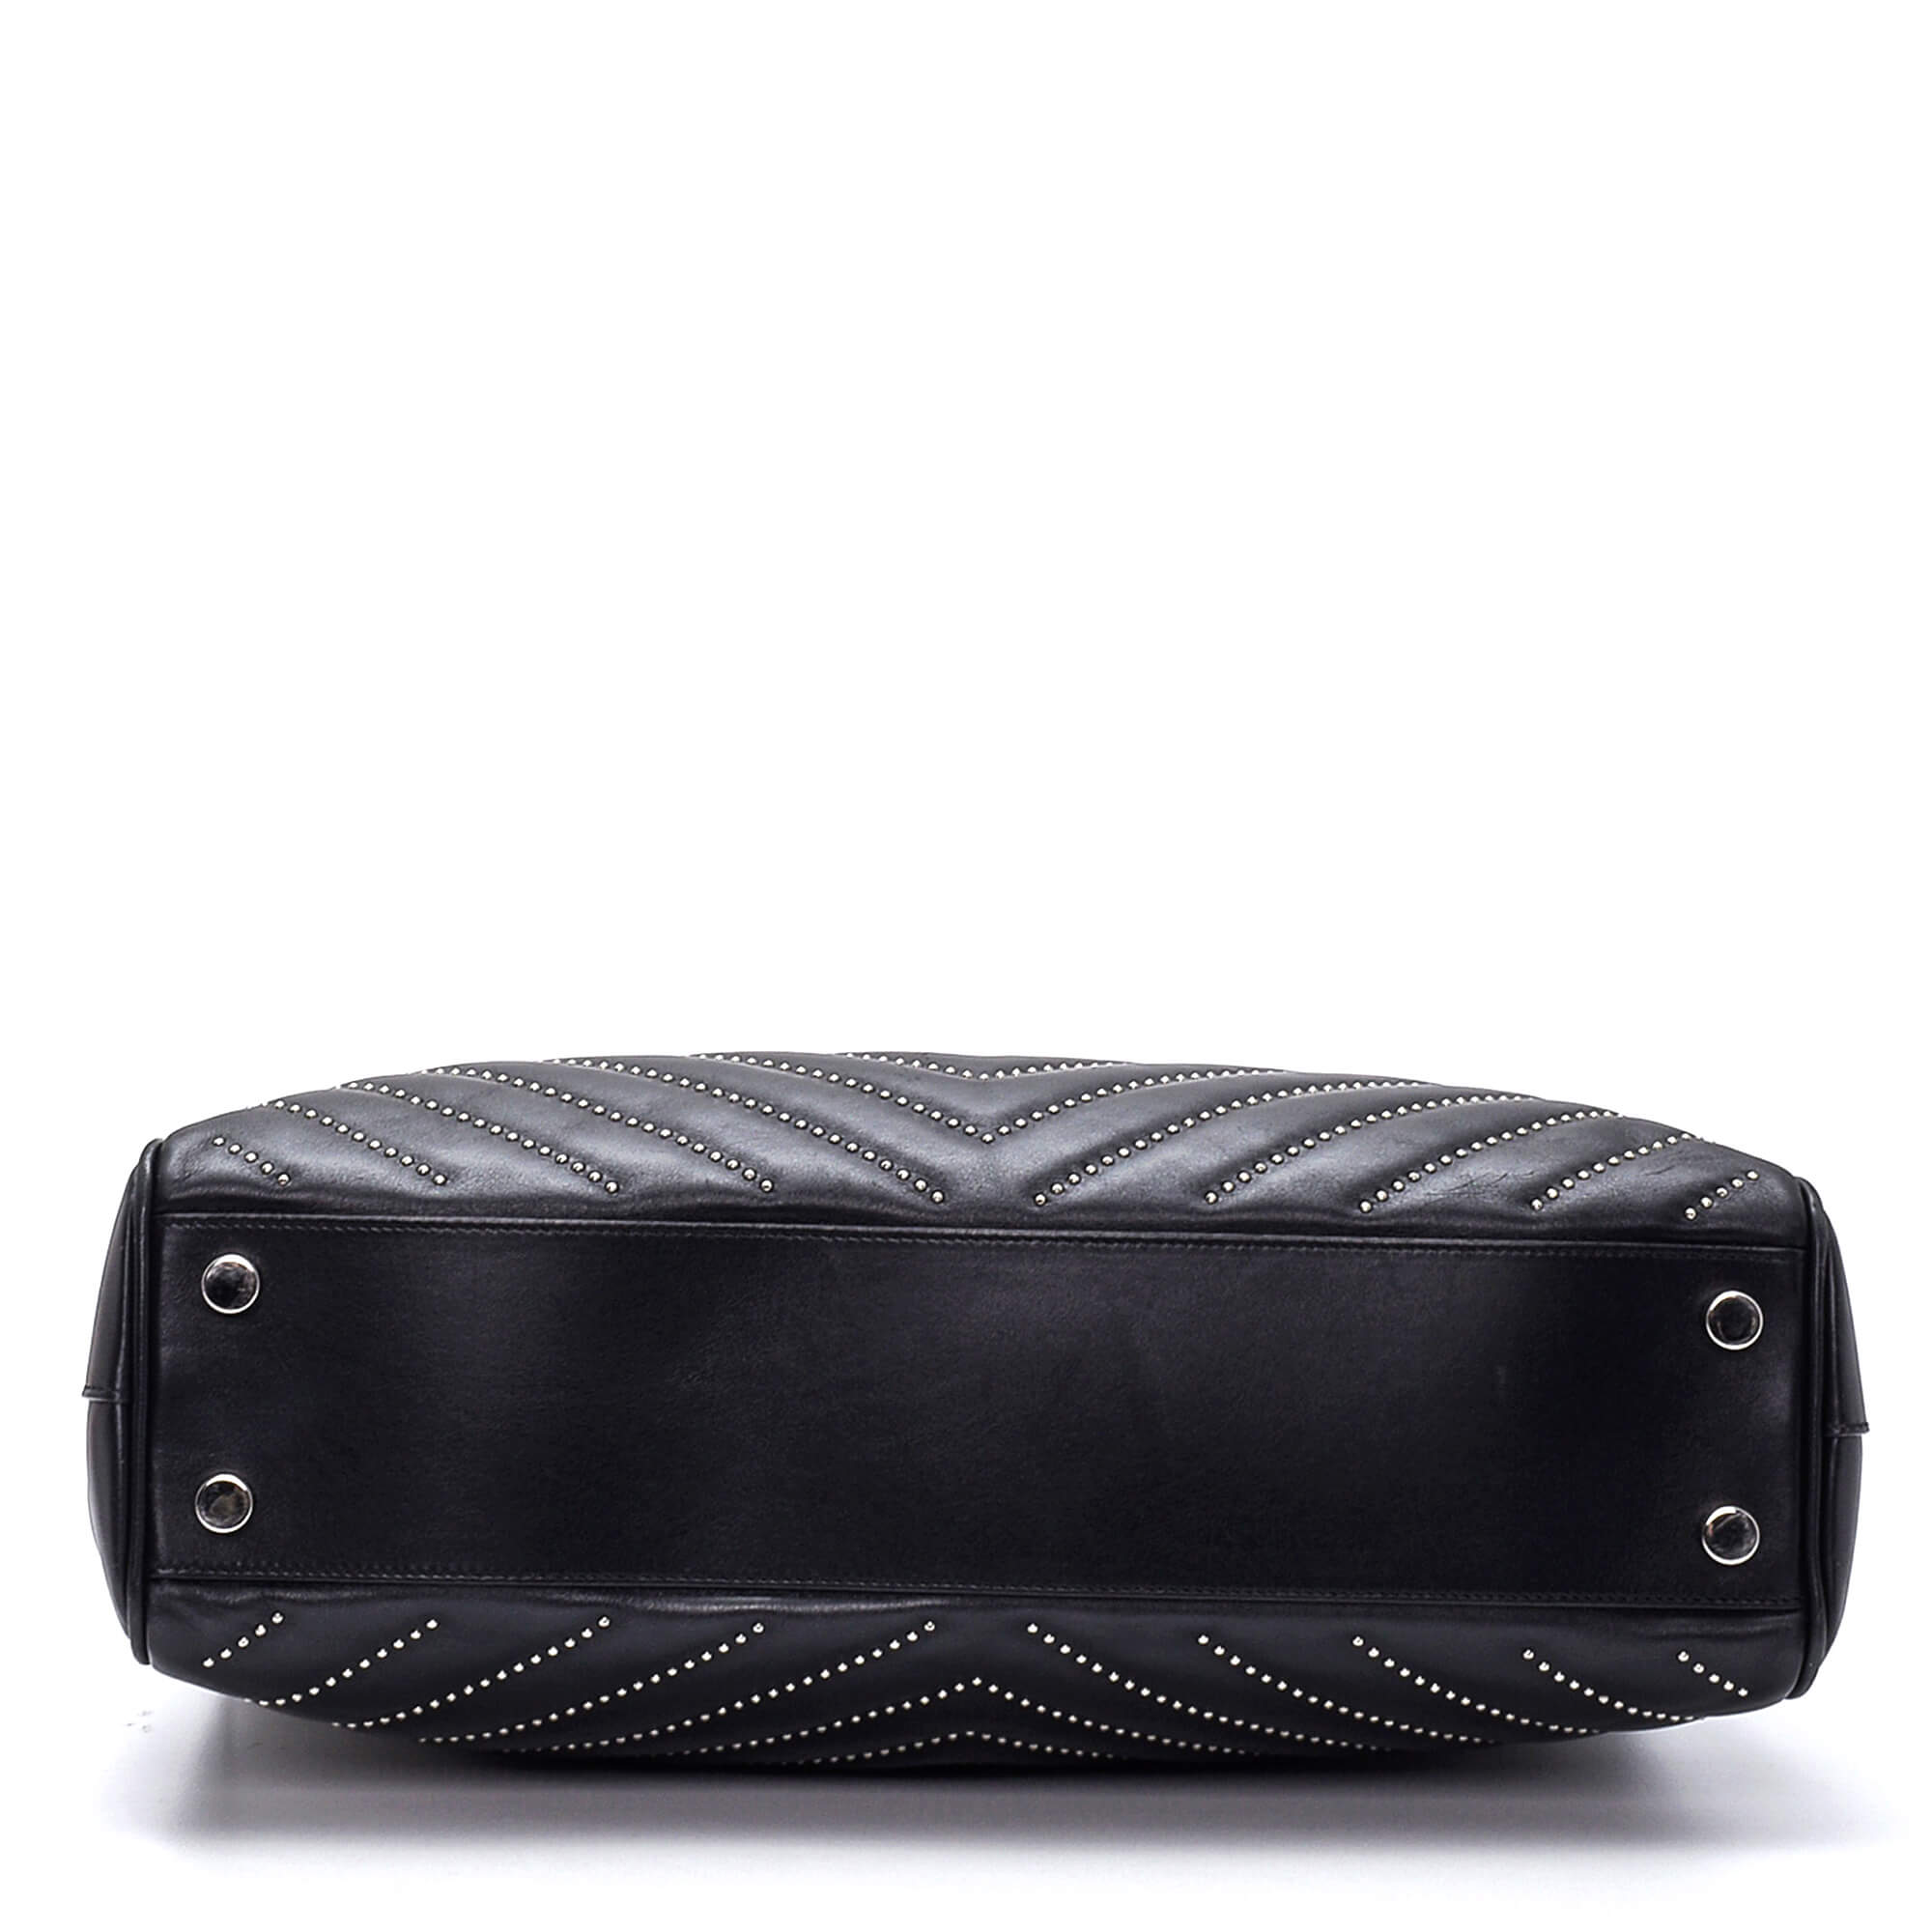 Yves Saint Laurent - Black Studded Chevron Leather Monogram Tote Bag